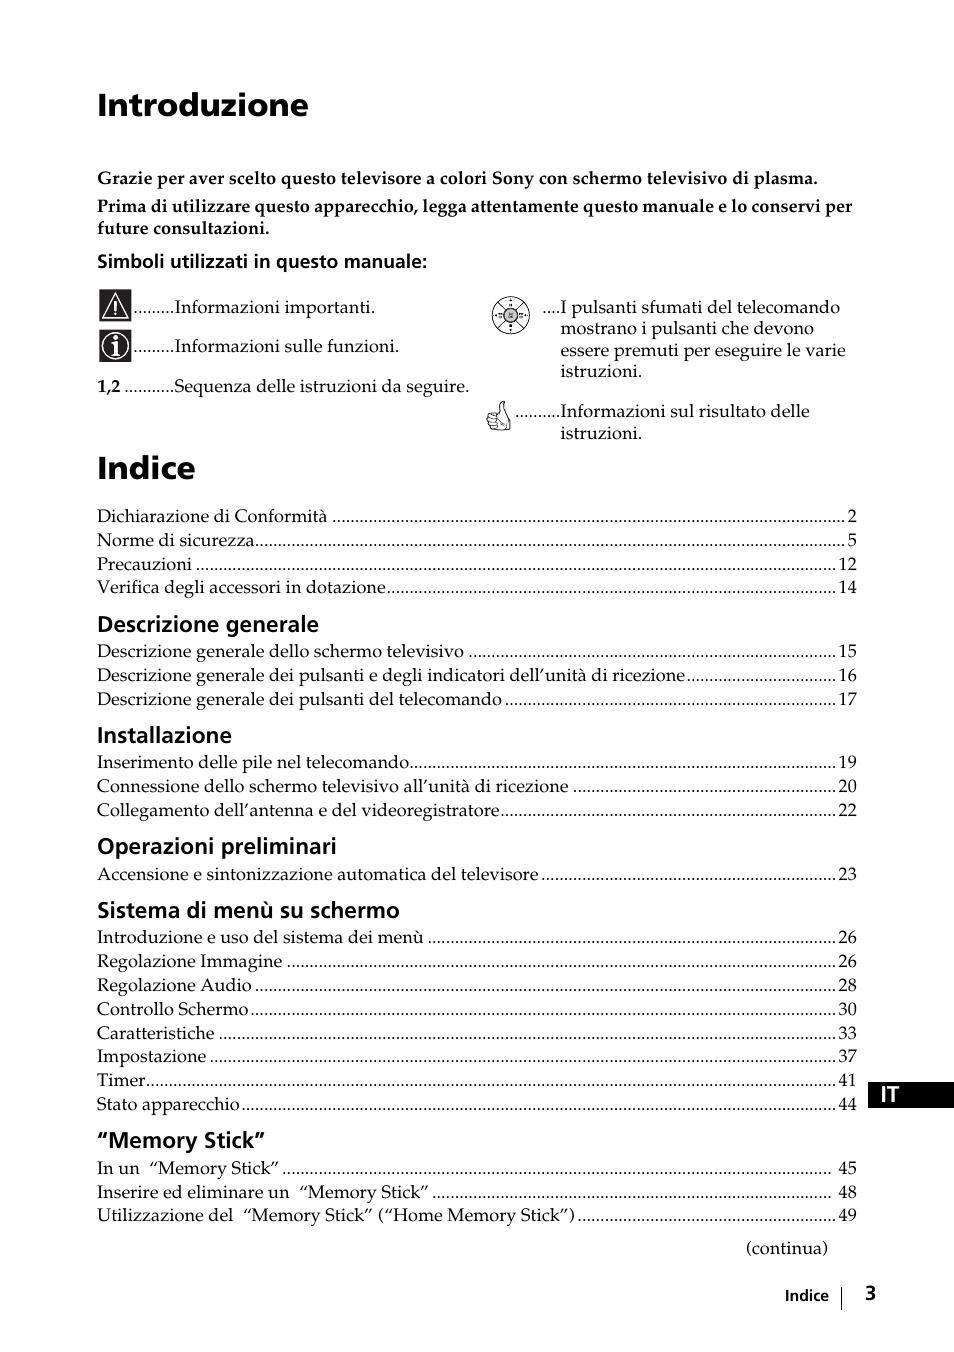 Introduzione, Indice | Sony KE-42MR1 Manuale d'uso | Pagina 4 / 302